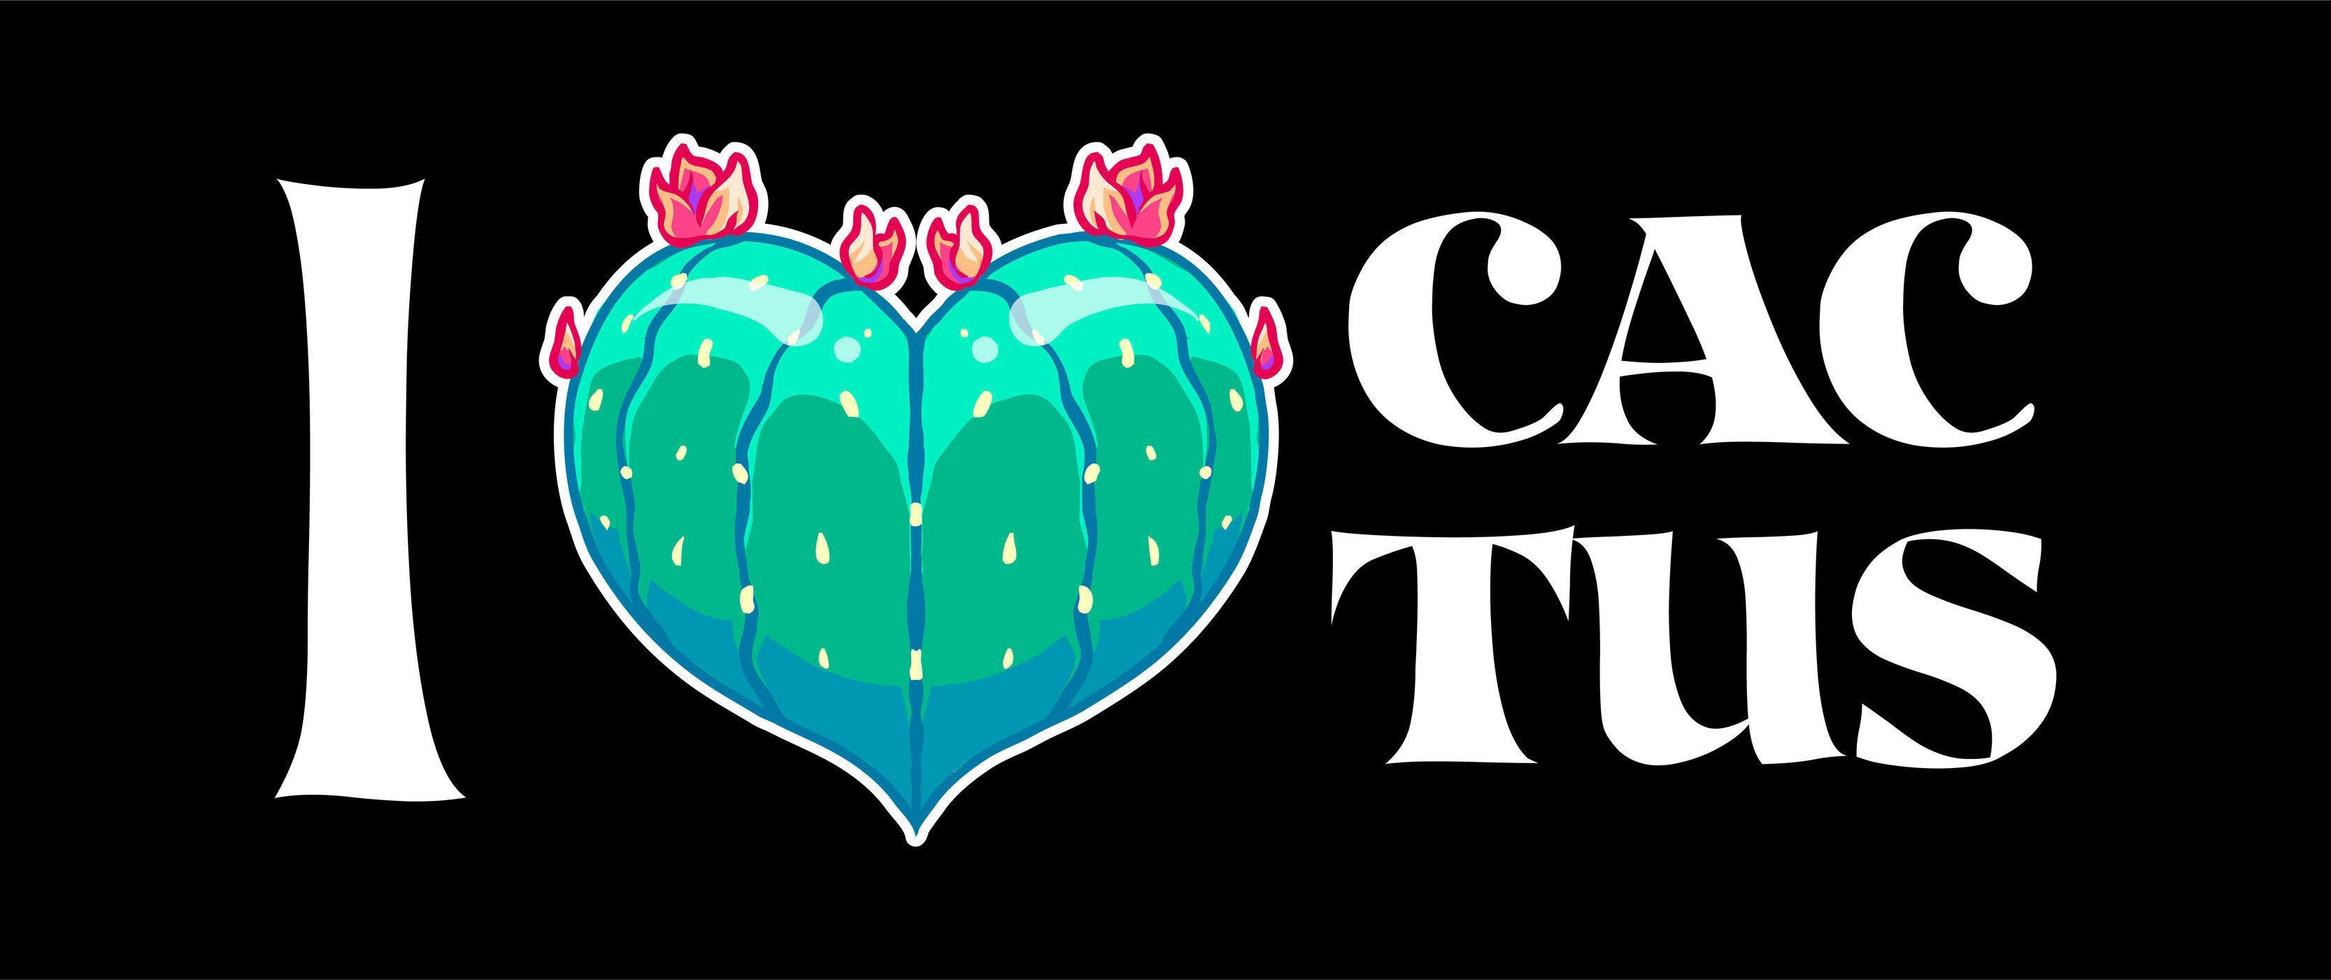 i love cactus illustration vector